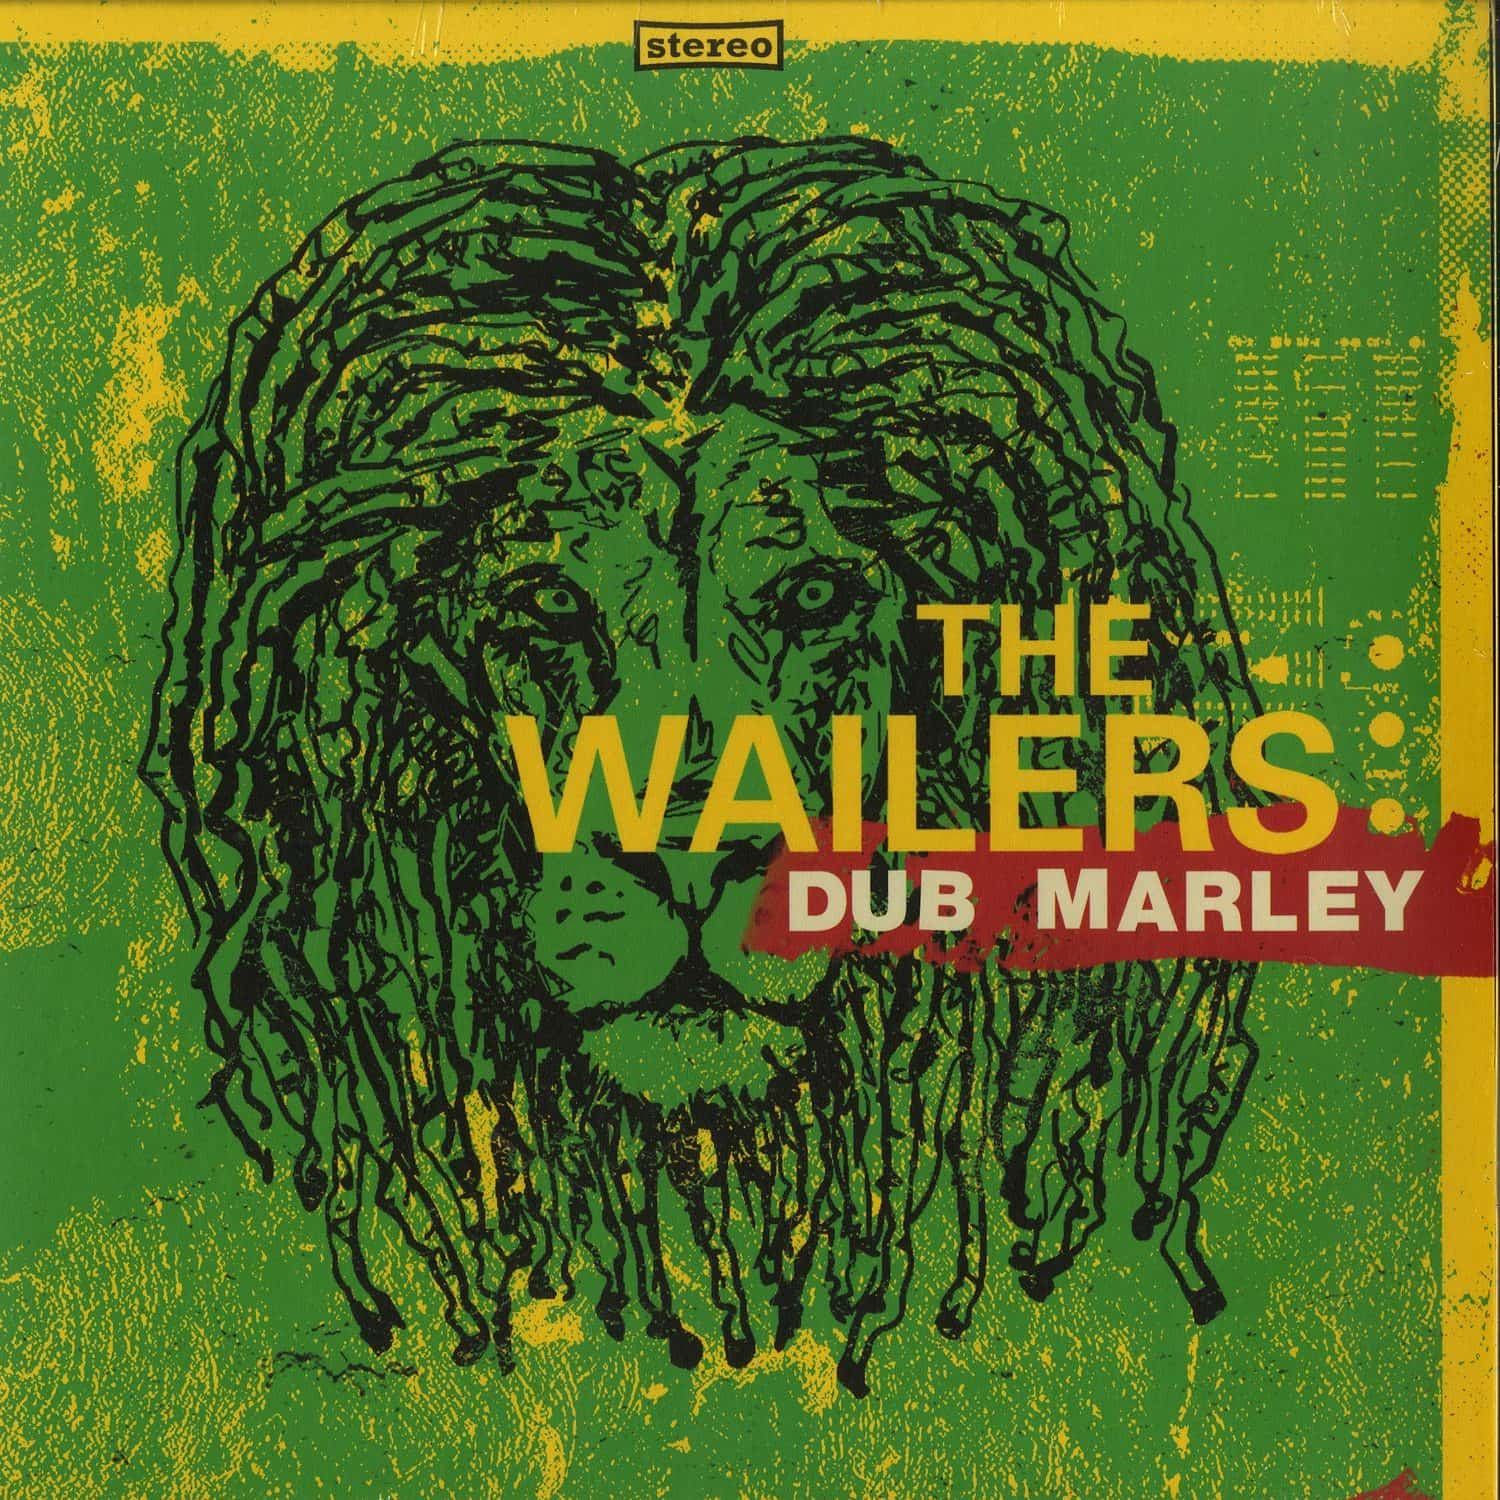 The Wailers - DUB MARLEY 